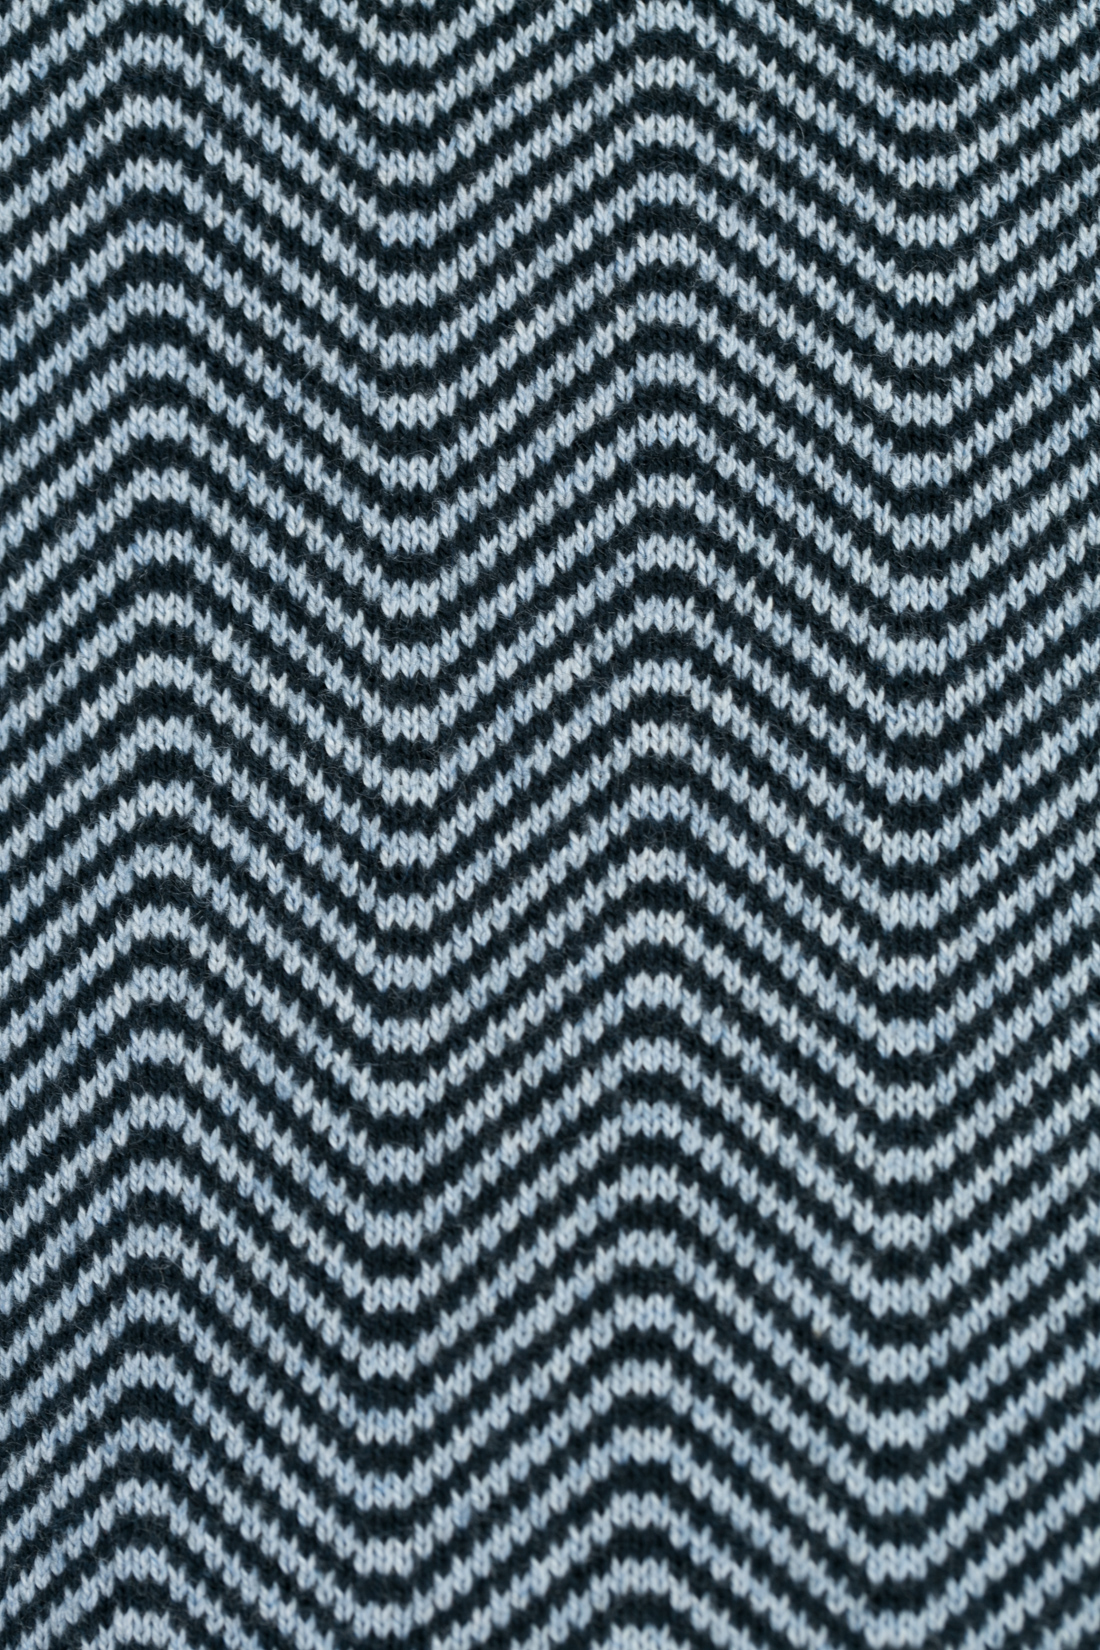 Пуловер с твидовым узором (арт. baon B637009), размер XXL, цвет синий Пуловер с твидовым узором (арт. baon B637009) - фото 3